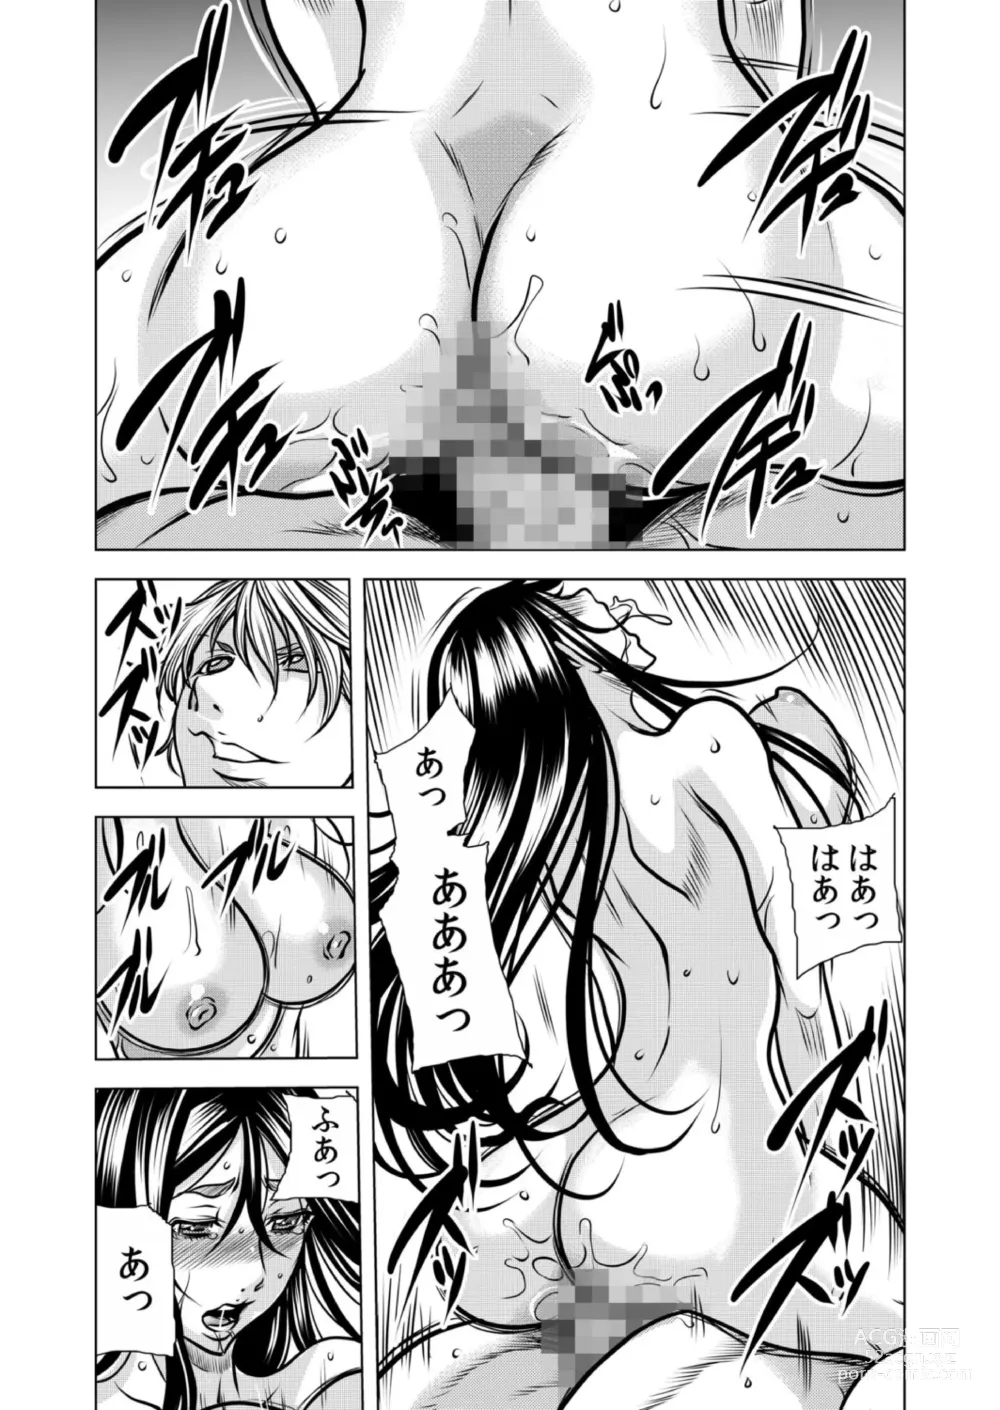 Page 7 of manga Mamasan,yobai ha OK desuka? VOL12